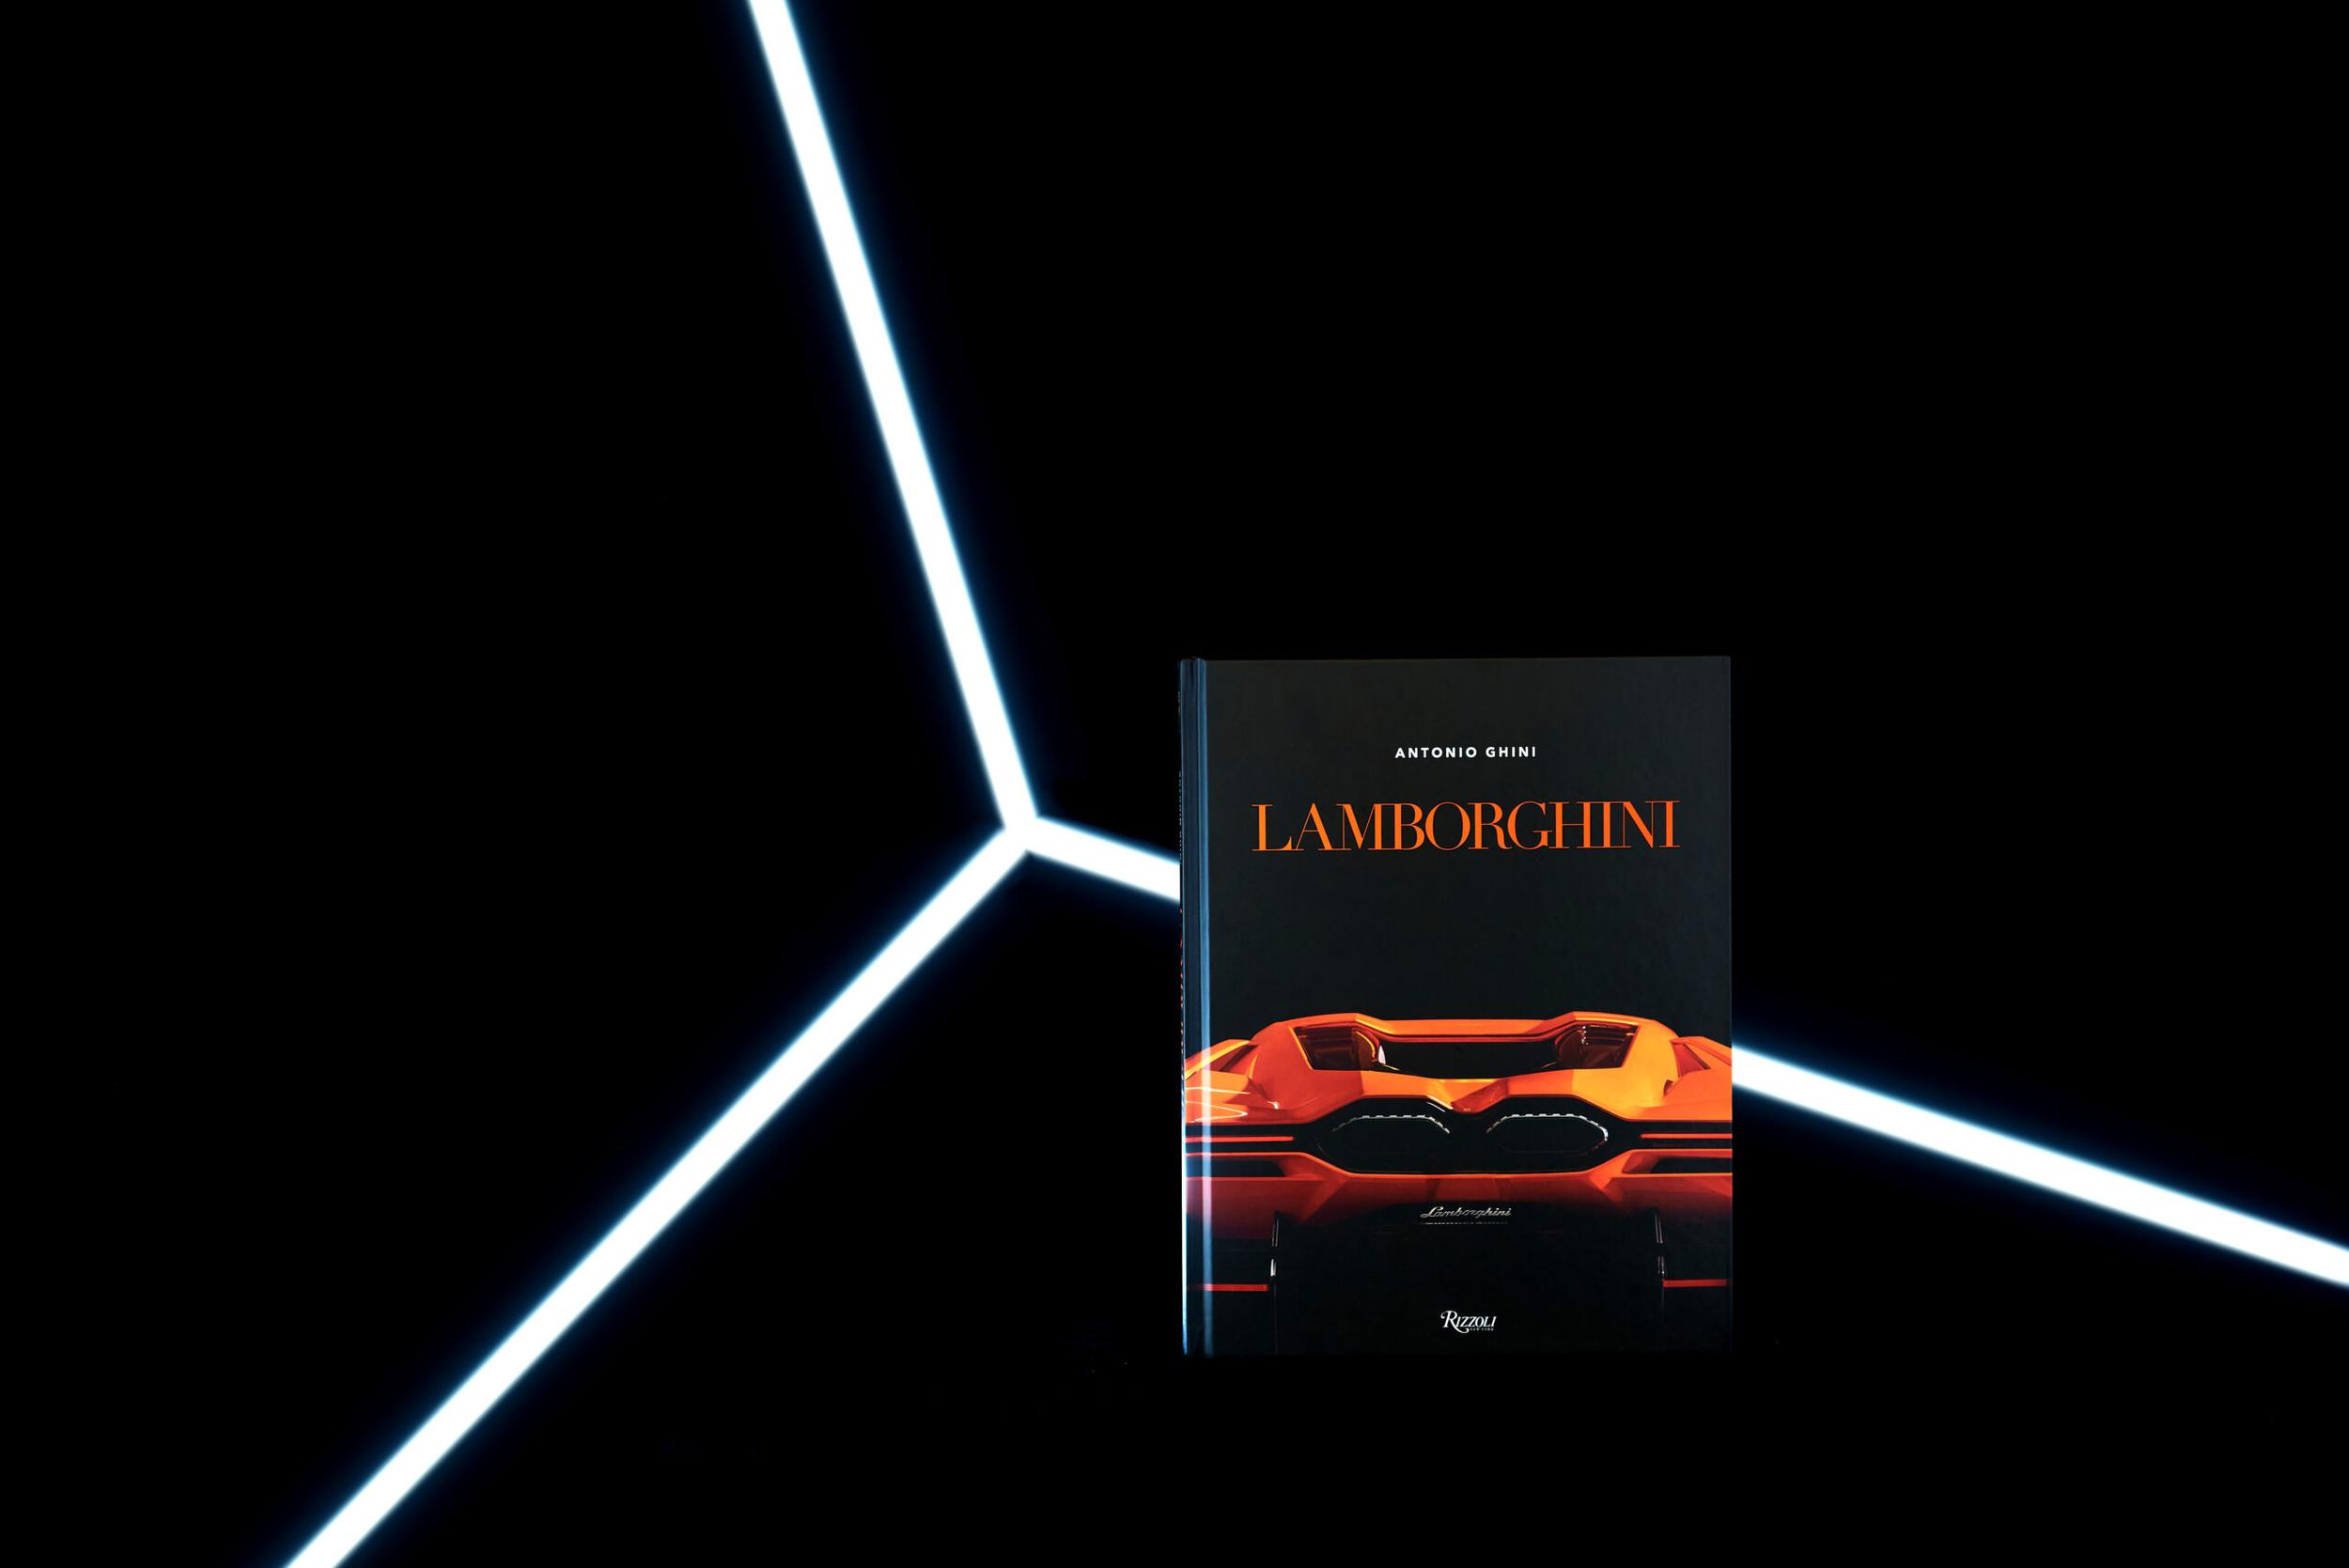 Lamborghini book showcased here